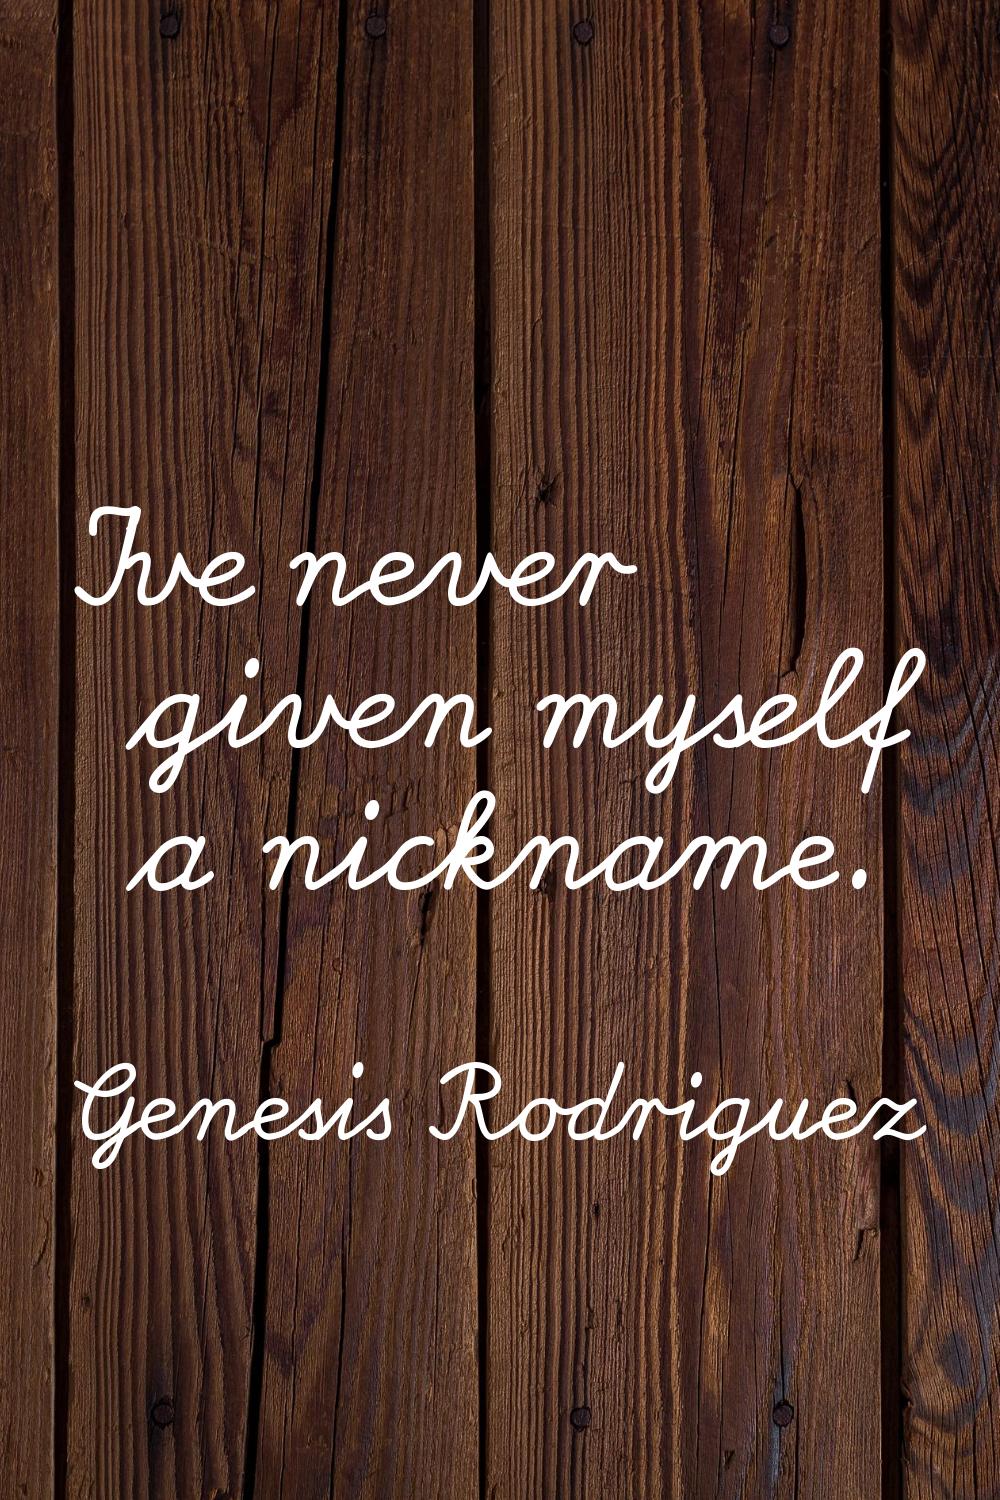 I've never given myself a nickname.